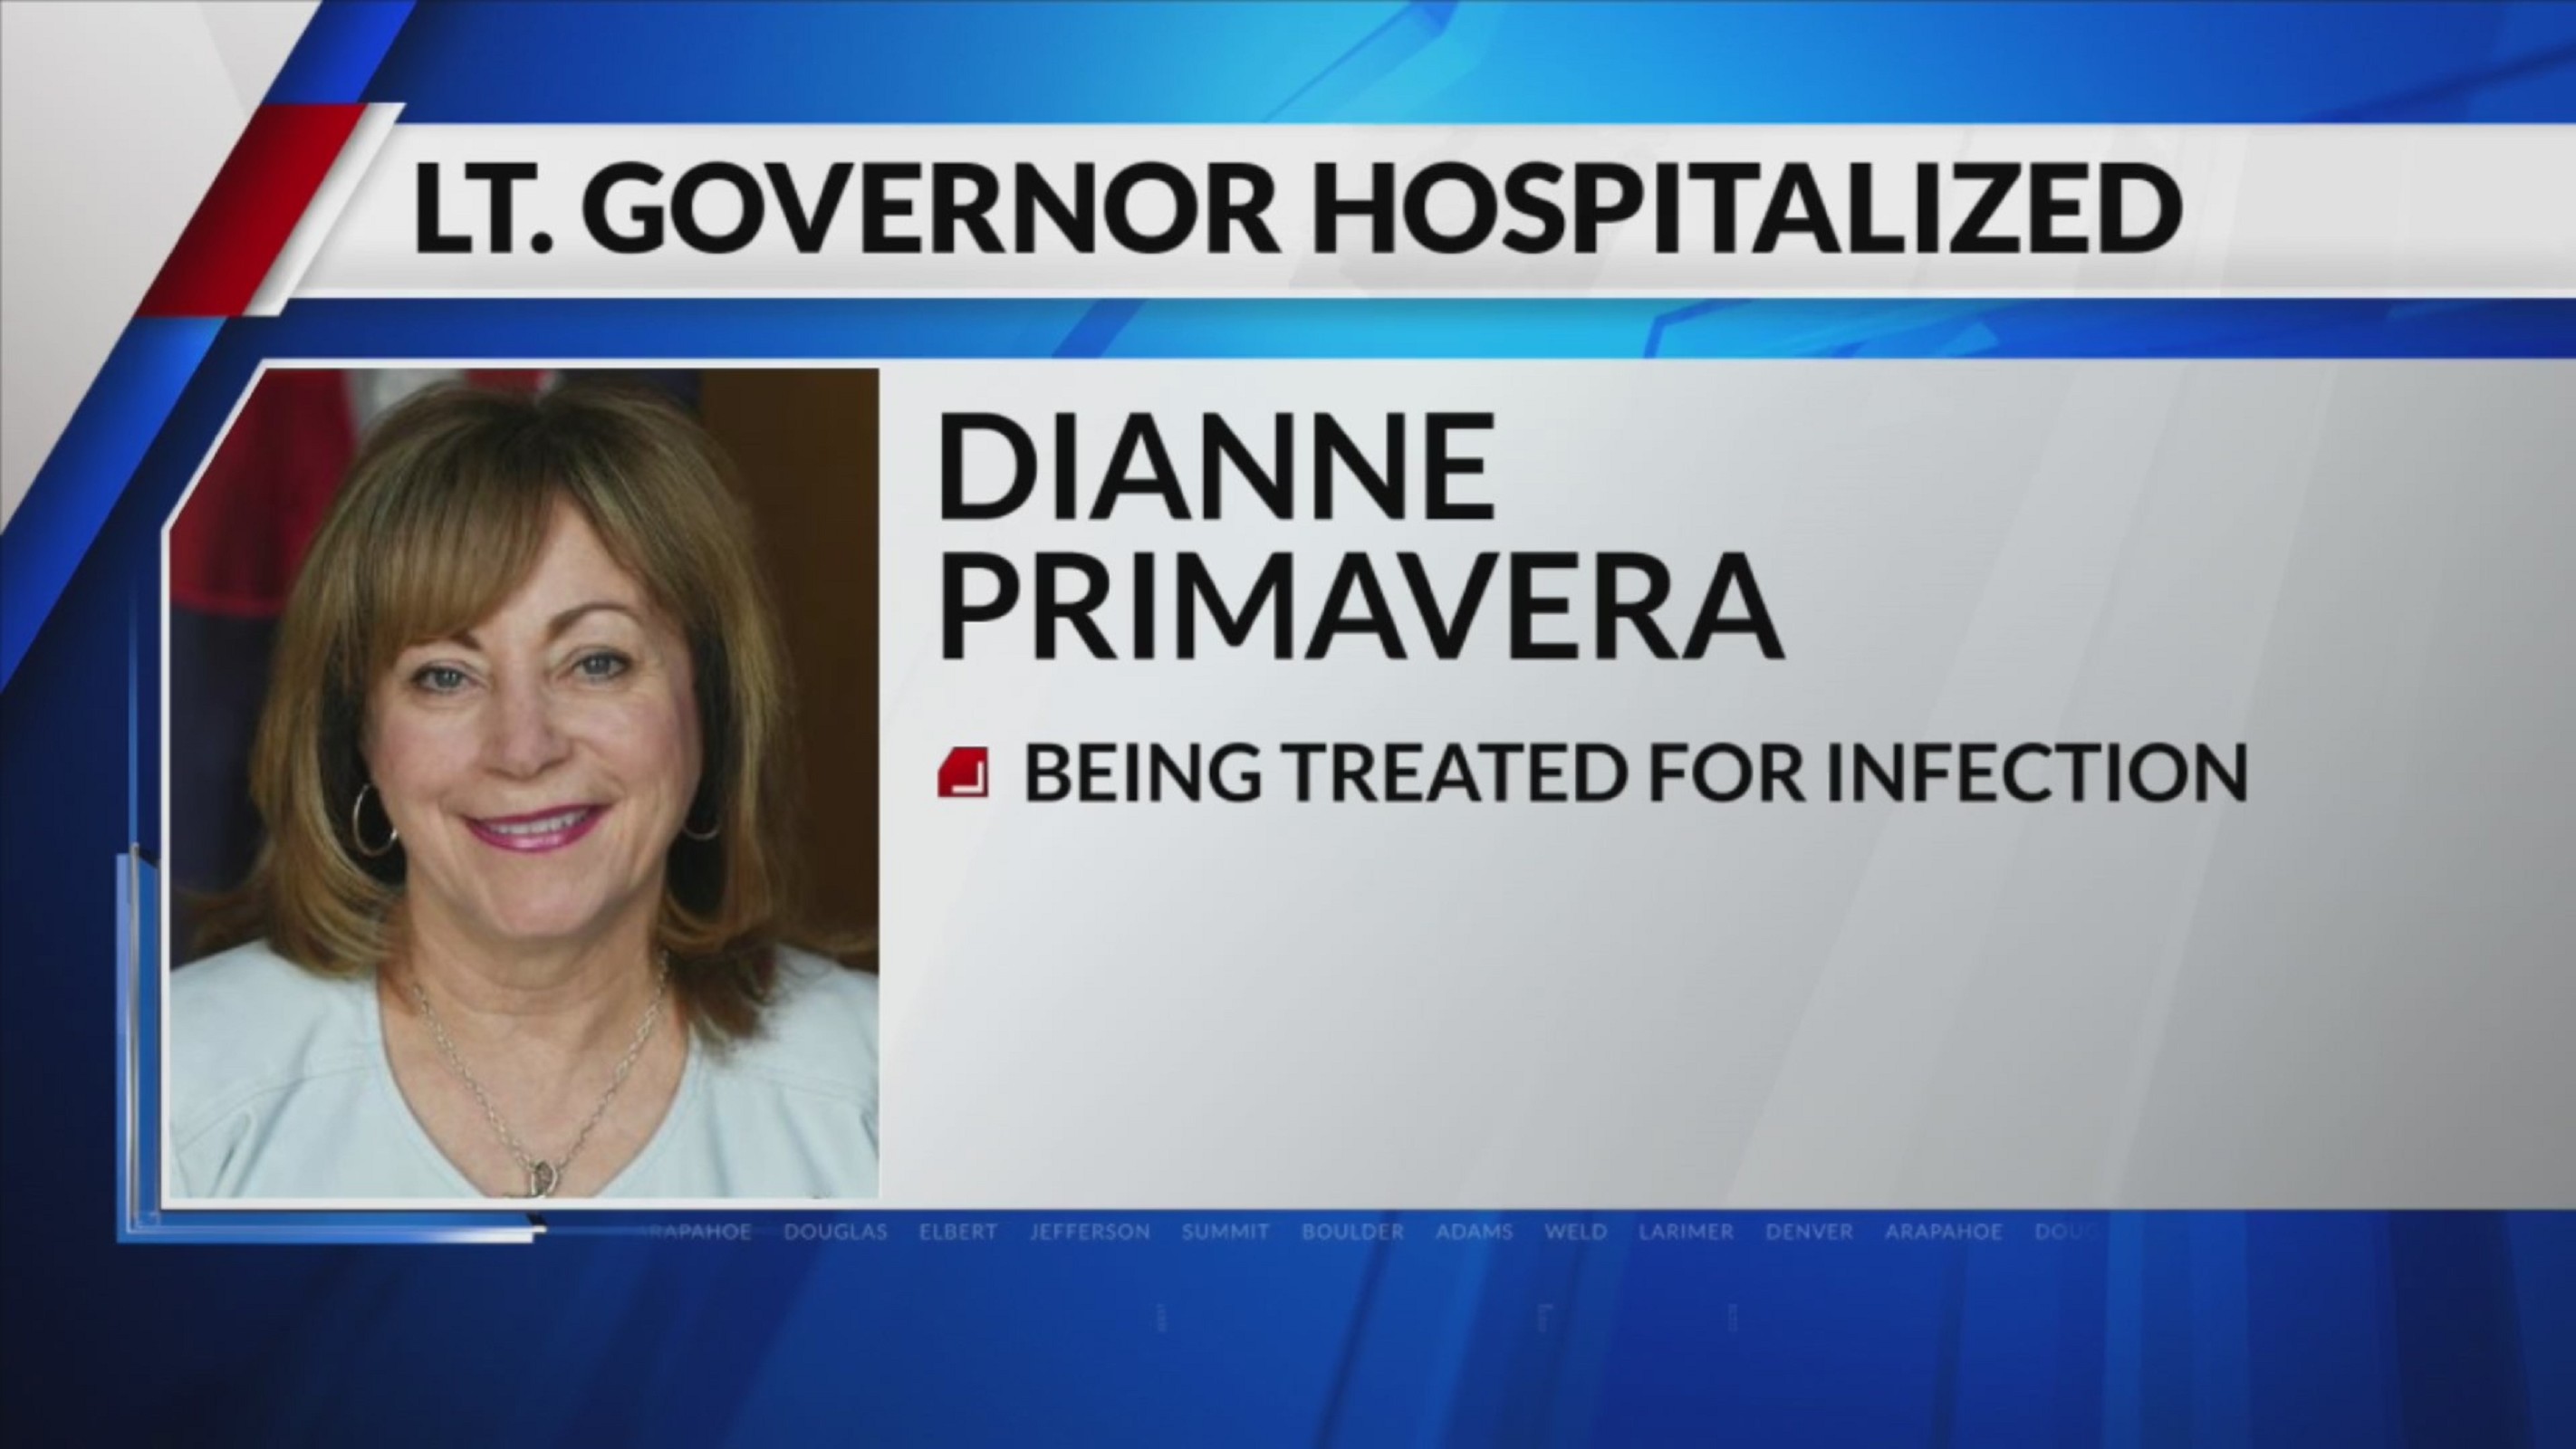 Lt. Gov. Dianne Primavera hospitalized